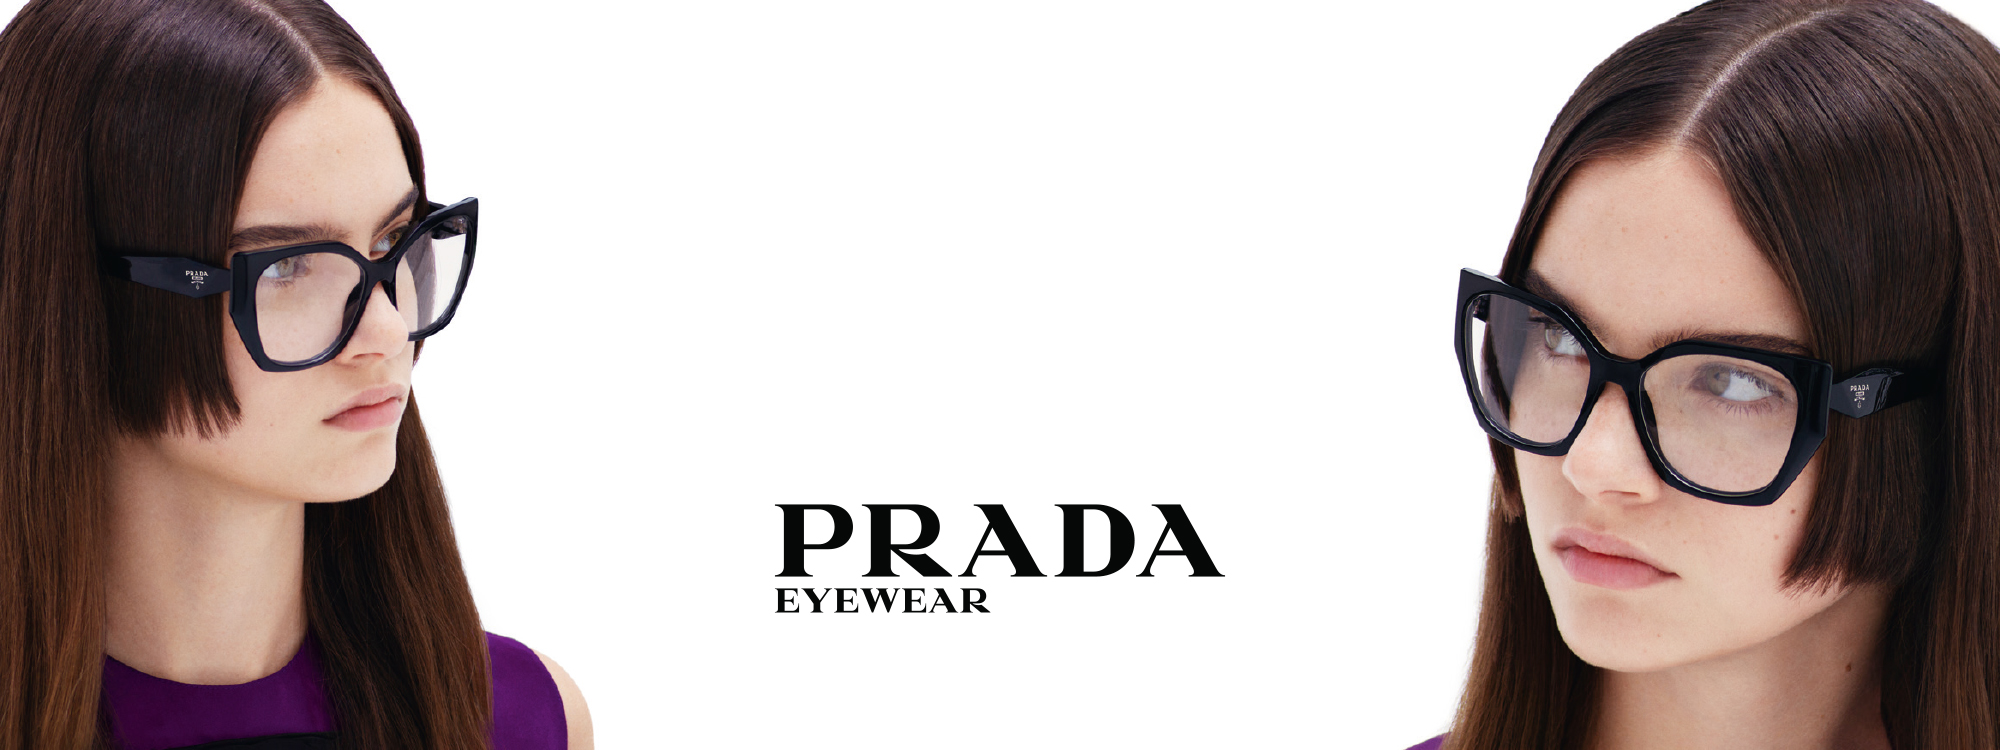 Prada - The Optic Shop